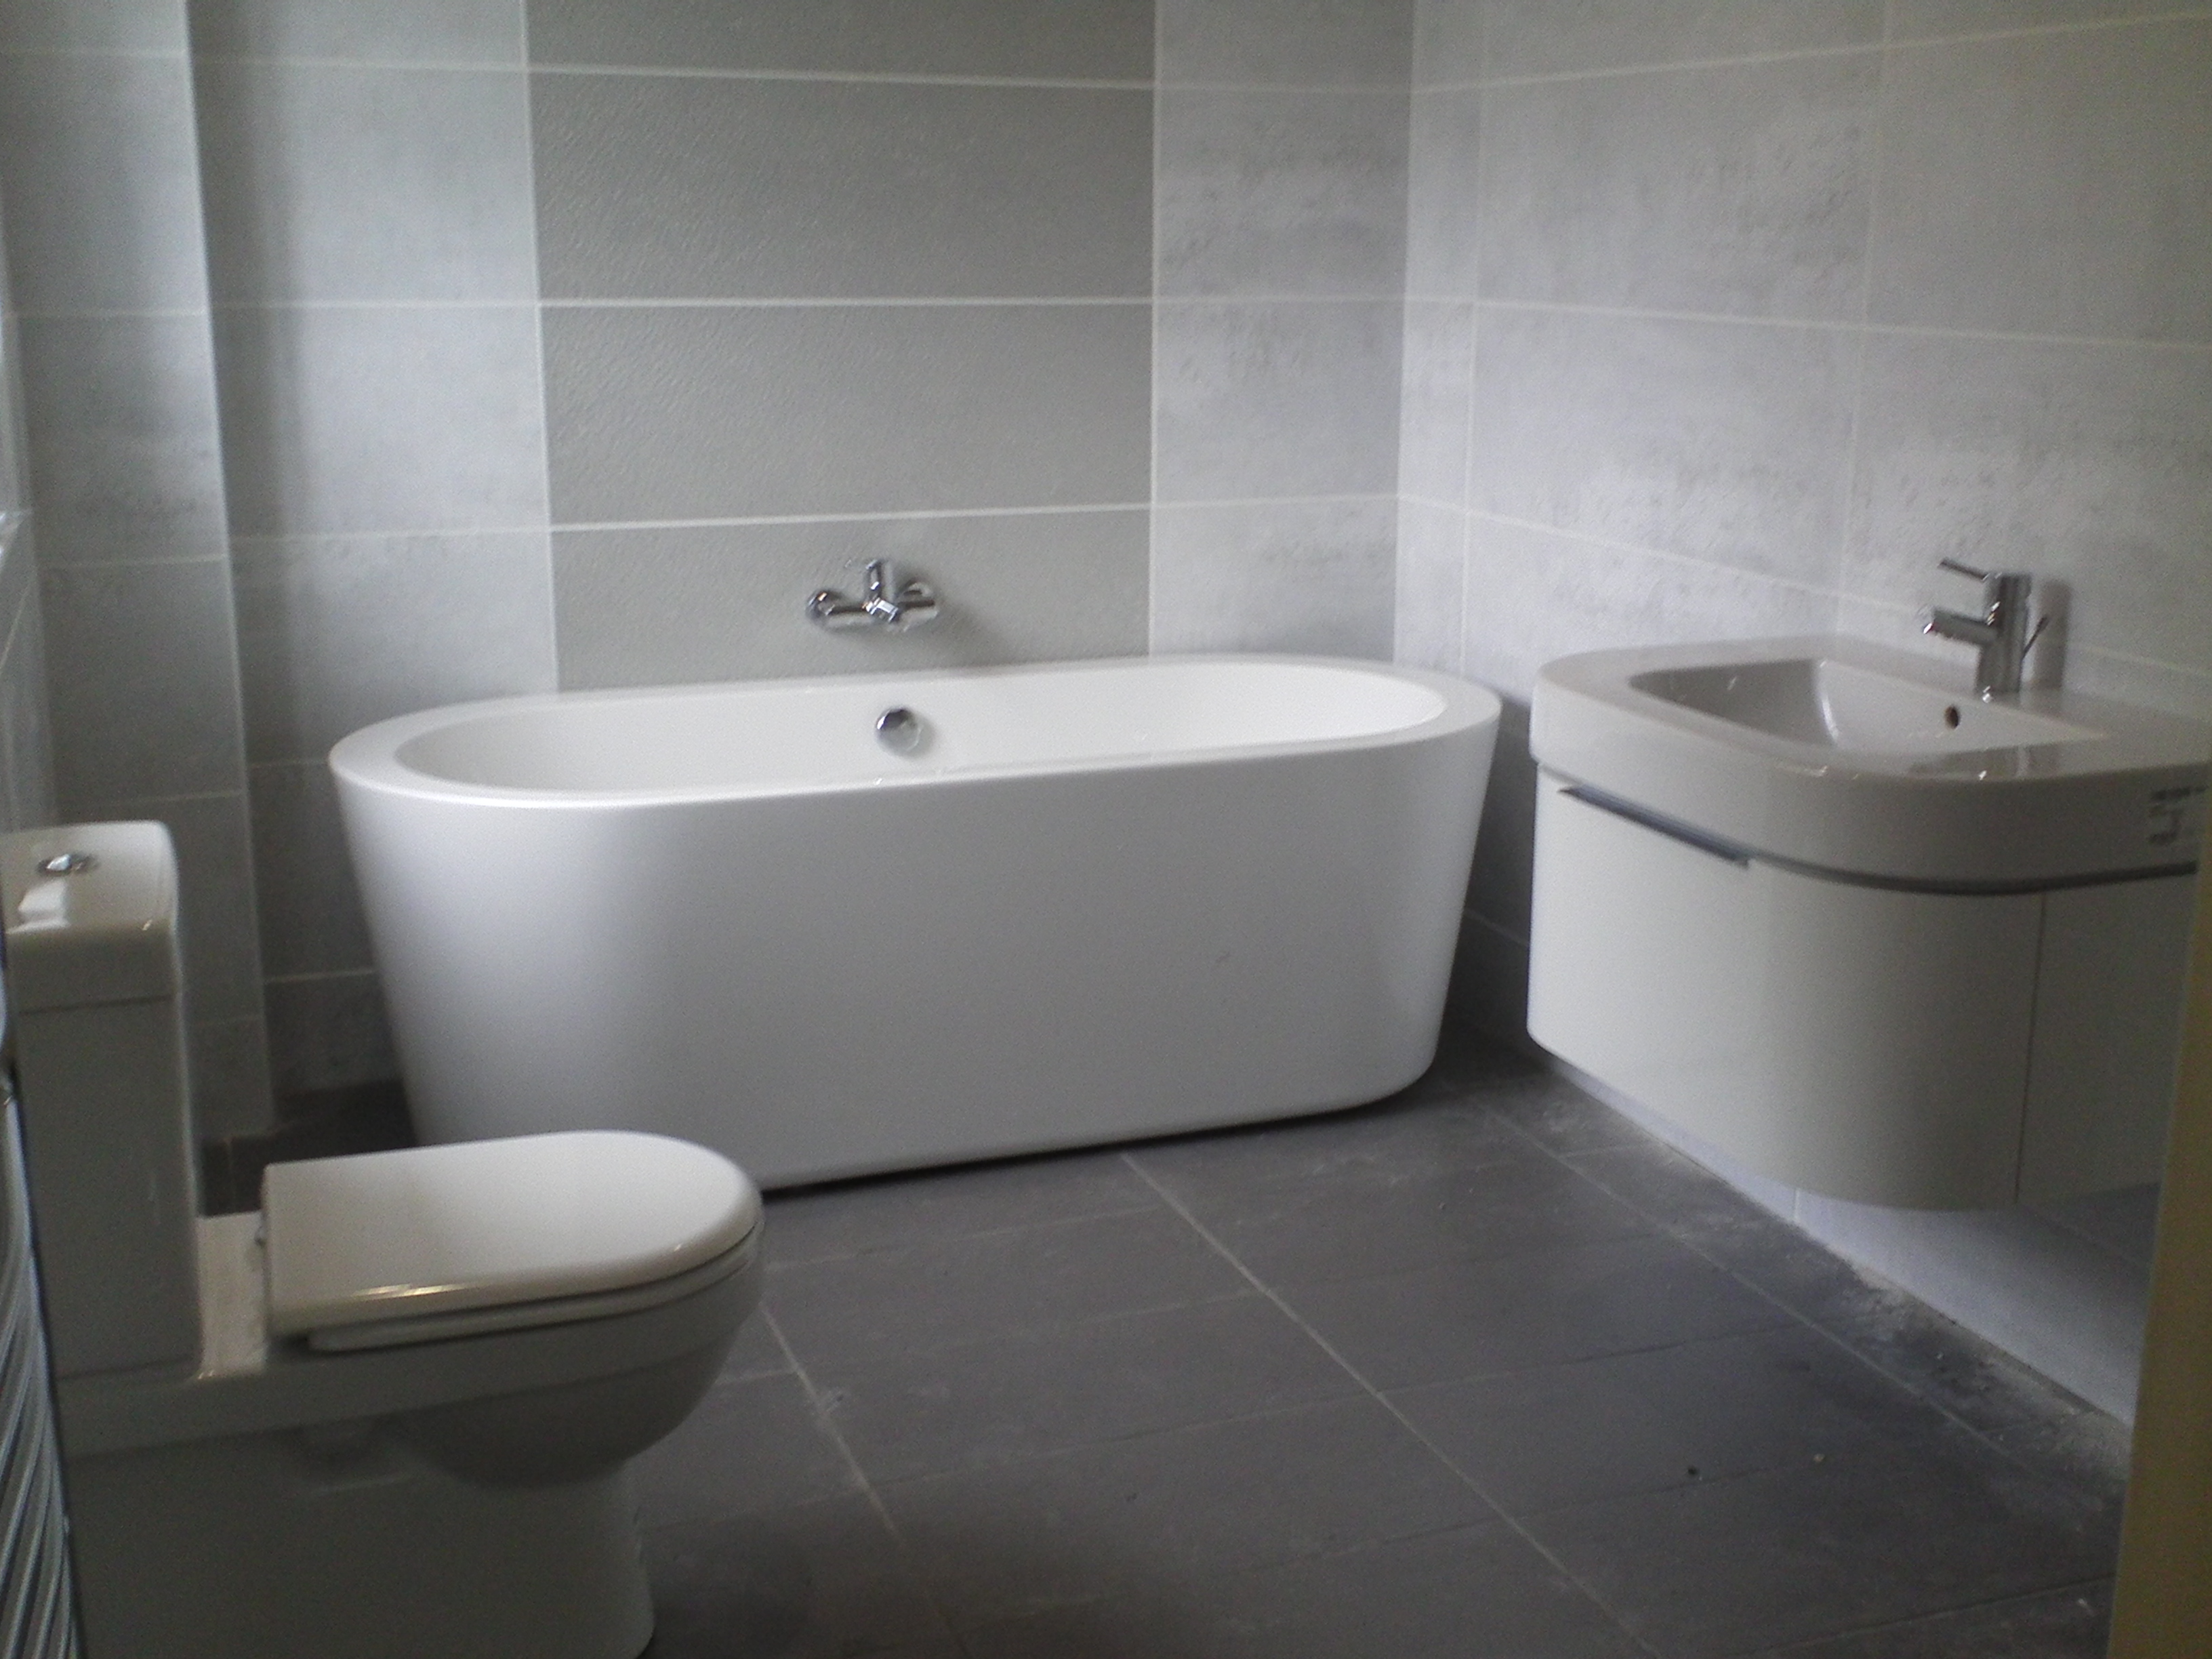 luxury-victorian-bathroom-ideas-uk-with-bathroom-design-ideas-2012-uk-imga0258-bathroom-design-melton-mowbray